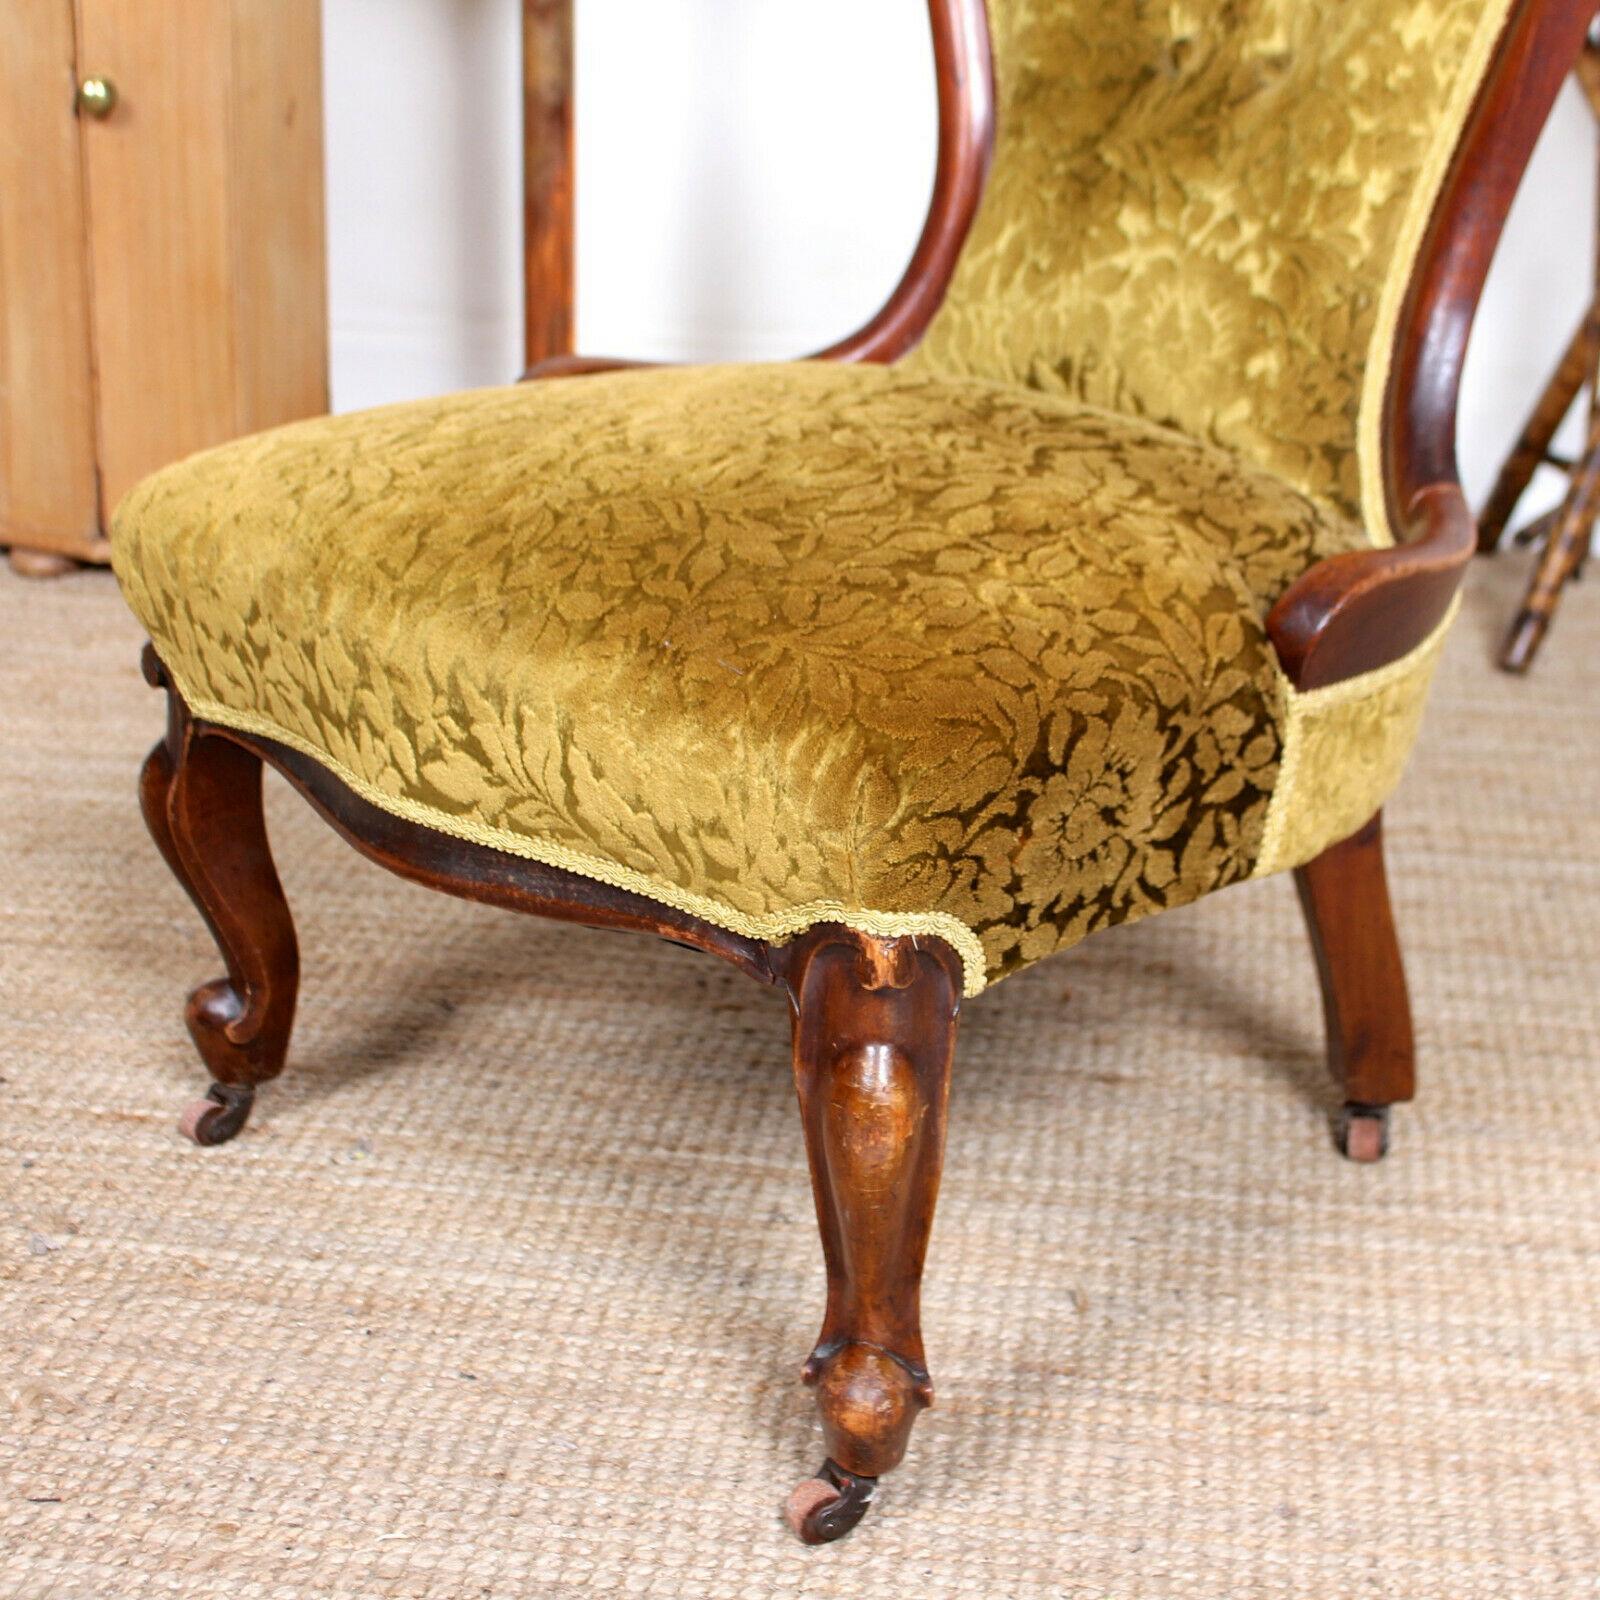 English Spoon Lounge Chair 19th Century Walnut Nursing Chair For Sale 4